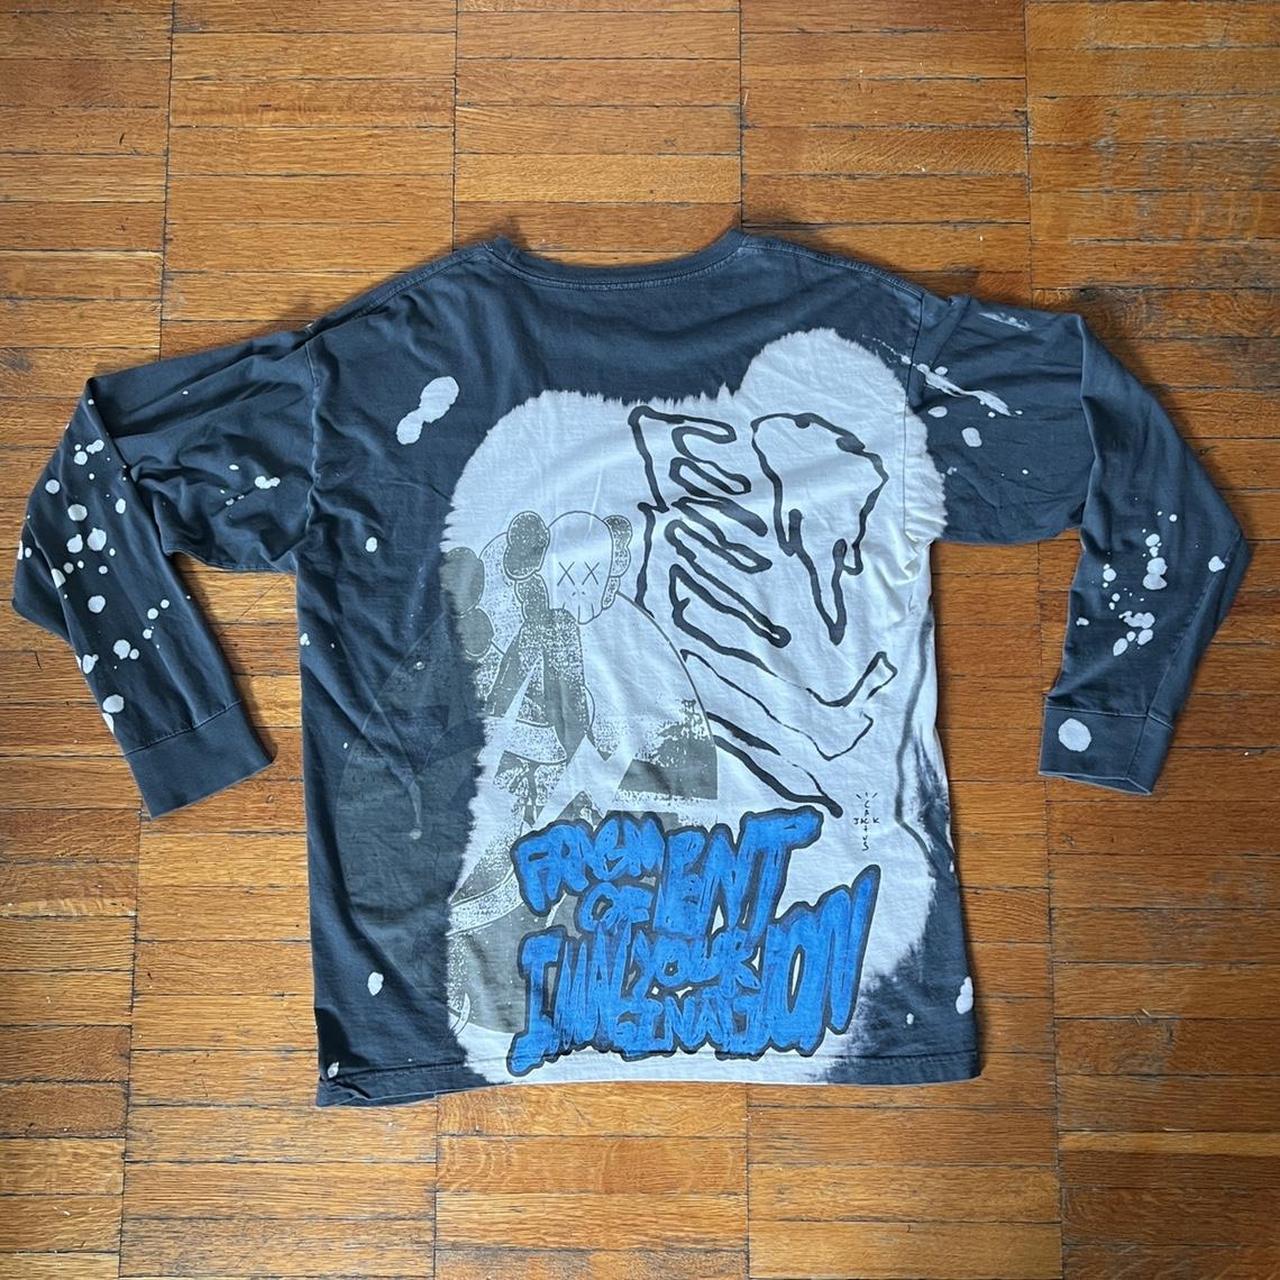 Travis Scott Cactus Jack For Fragment Logo Long Sleeve T-Shirt